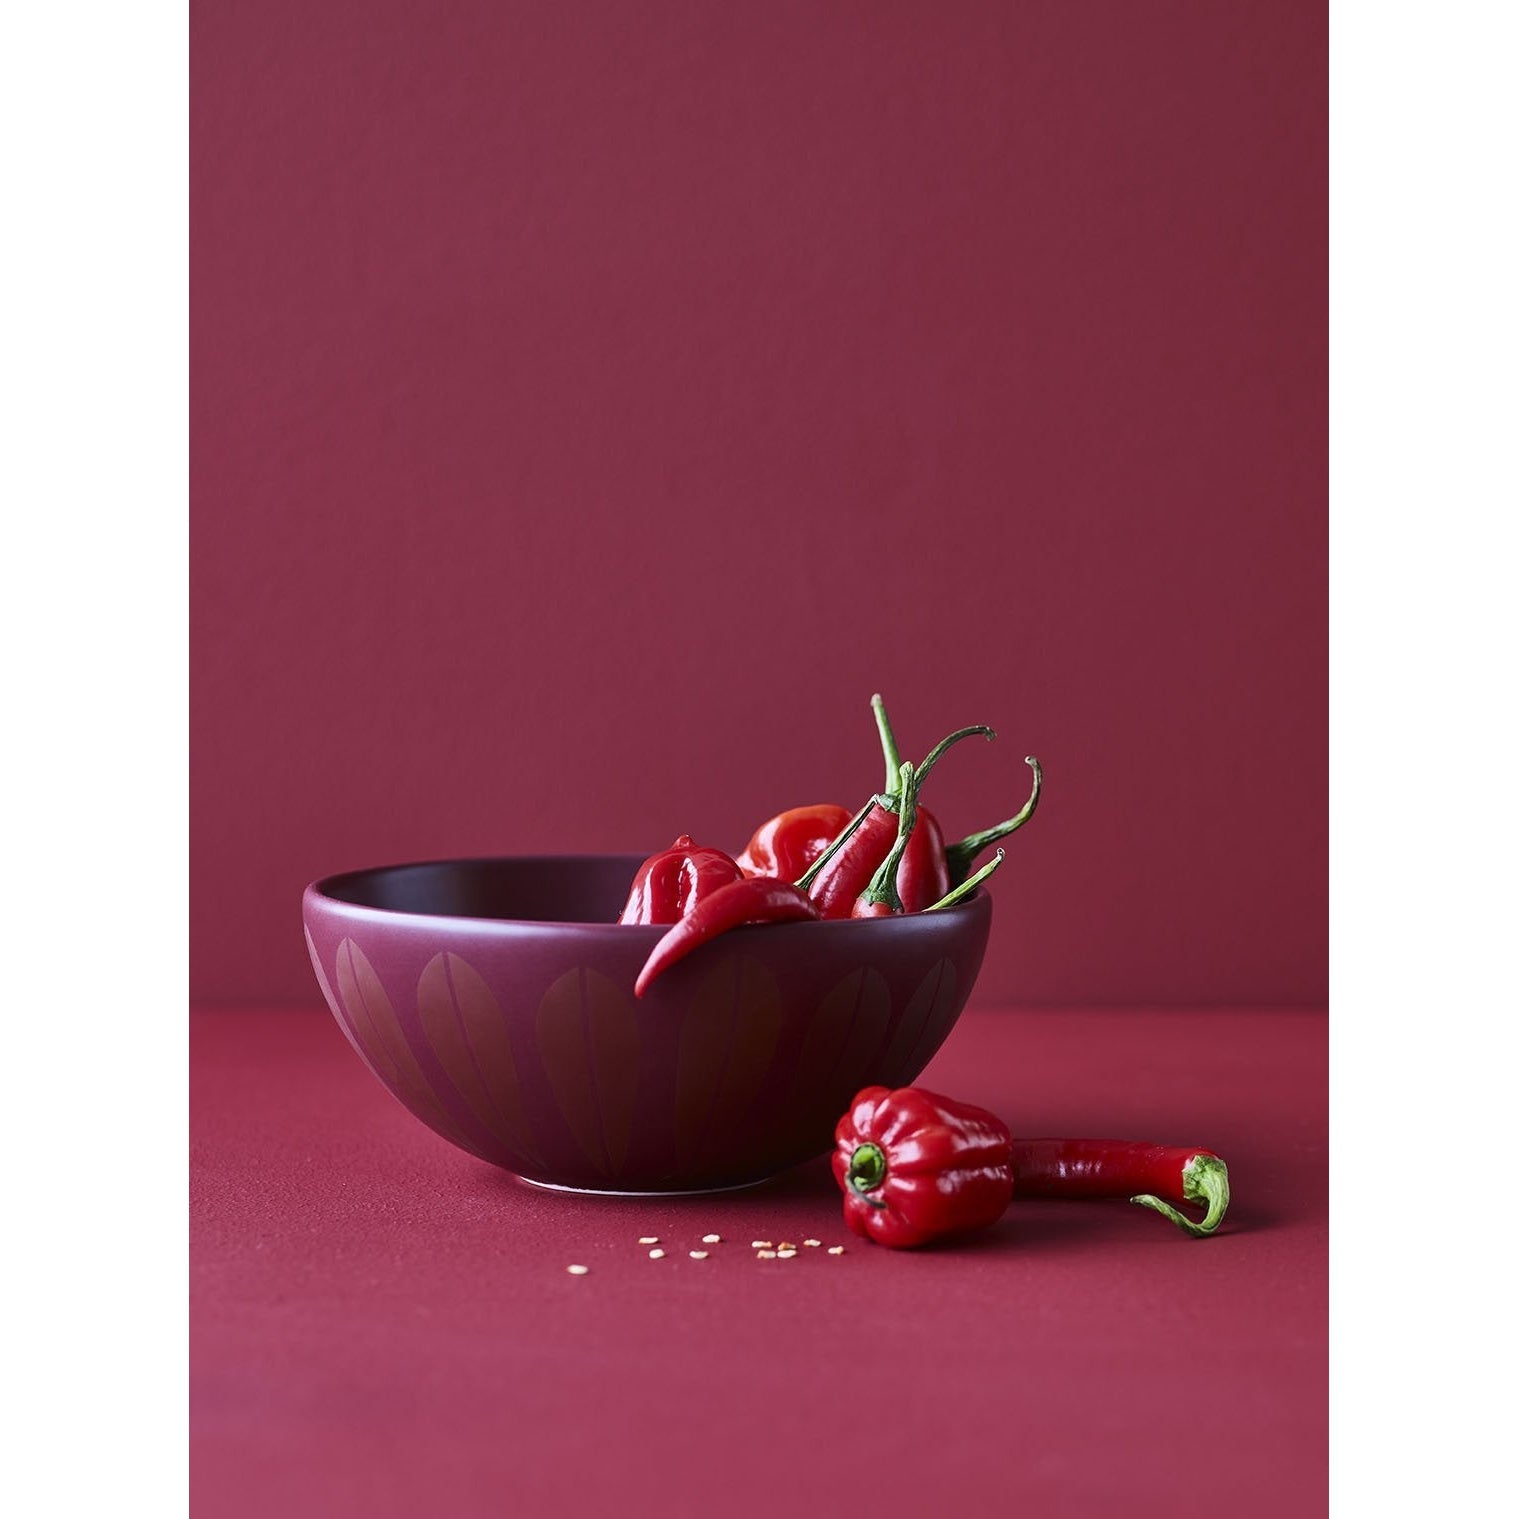 Lucie Kaas Arne Clausen Bowl scuro rosso, 21 cm